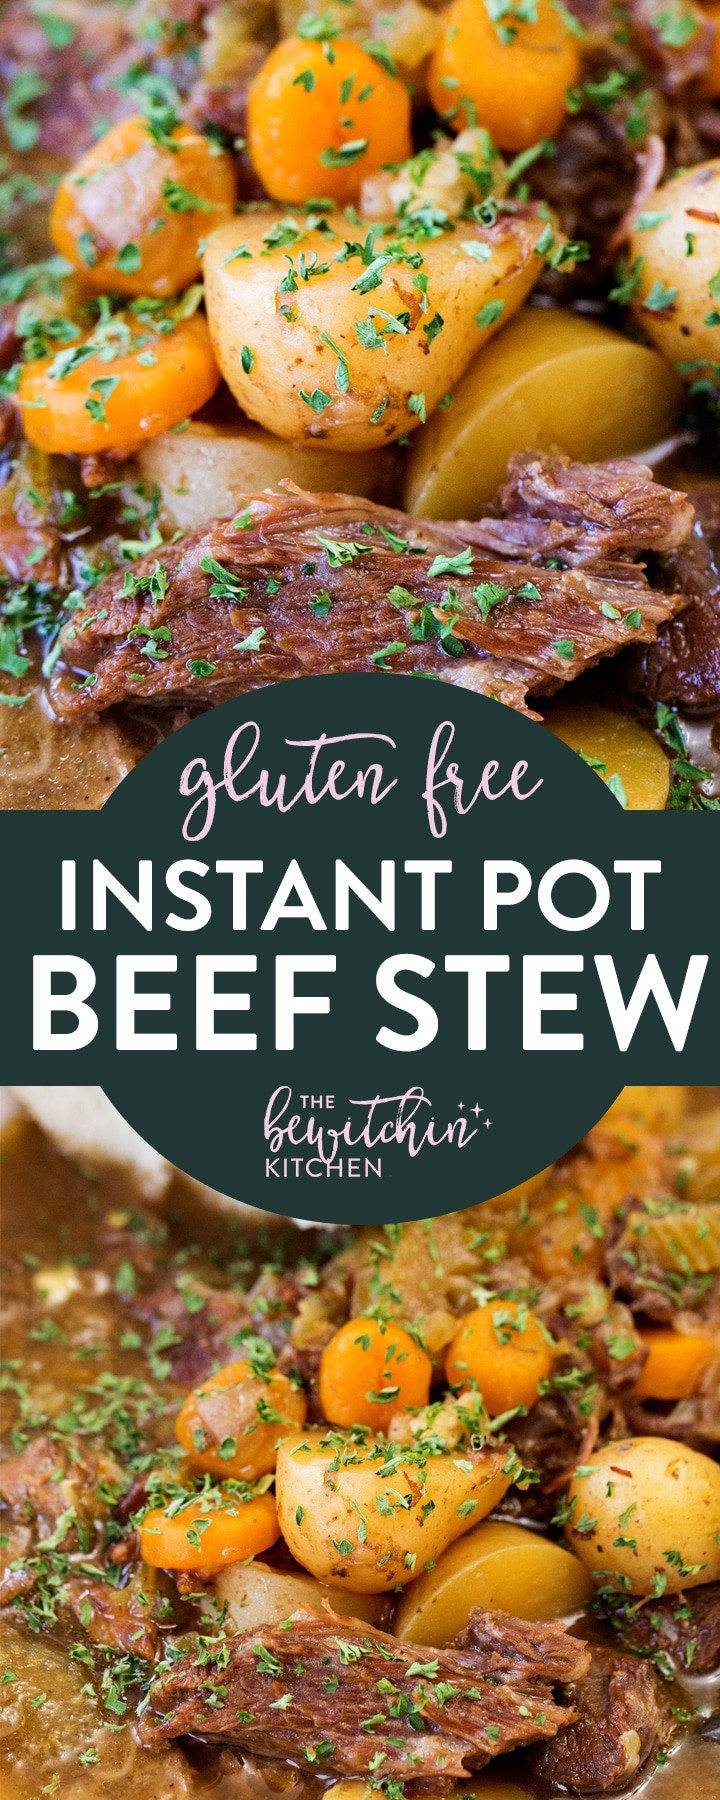 Gluten Free Instant Pot Recipes
 Gluten Free Instant Pot Beef Stew